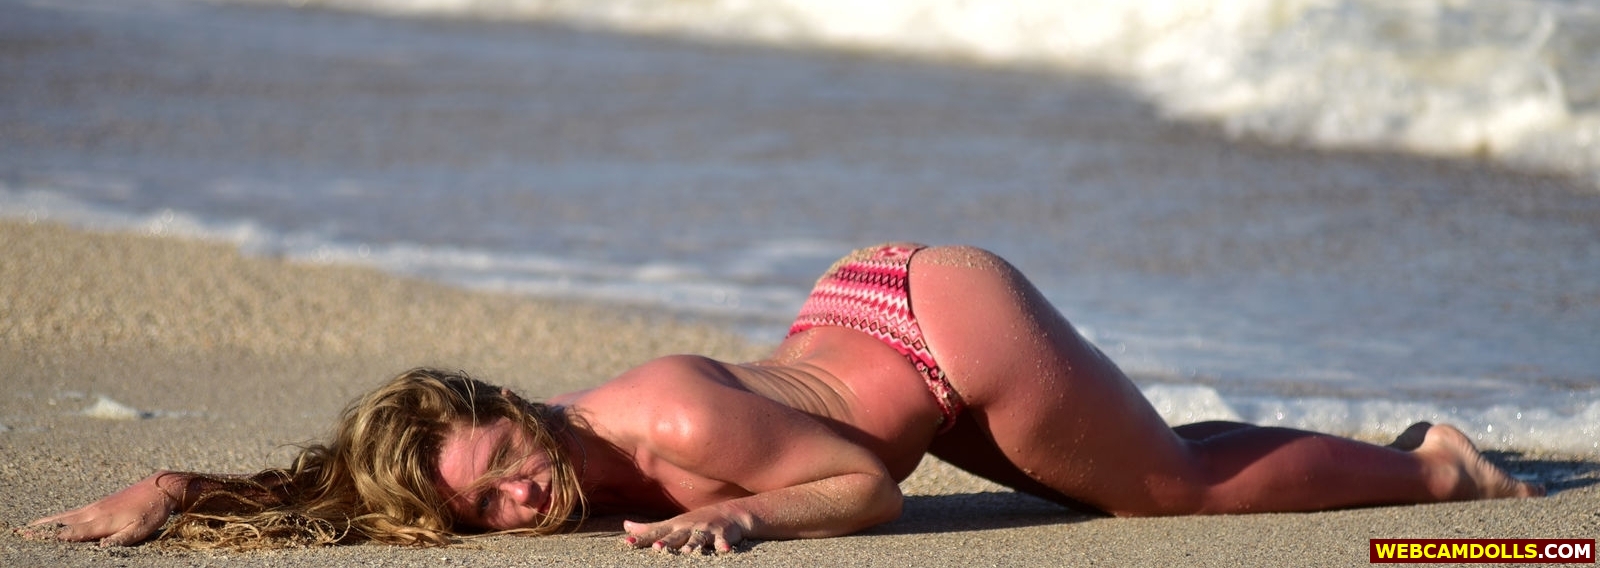 Blonde Girl laying on Sand wearing only Bikini Bottom on Webcamdolls